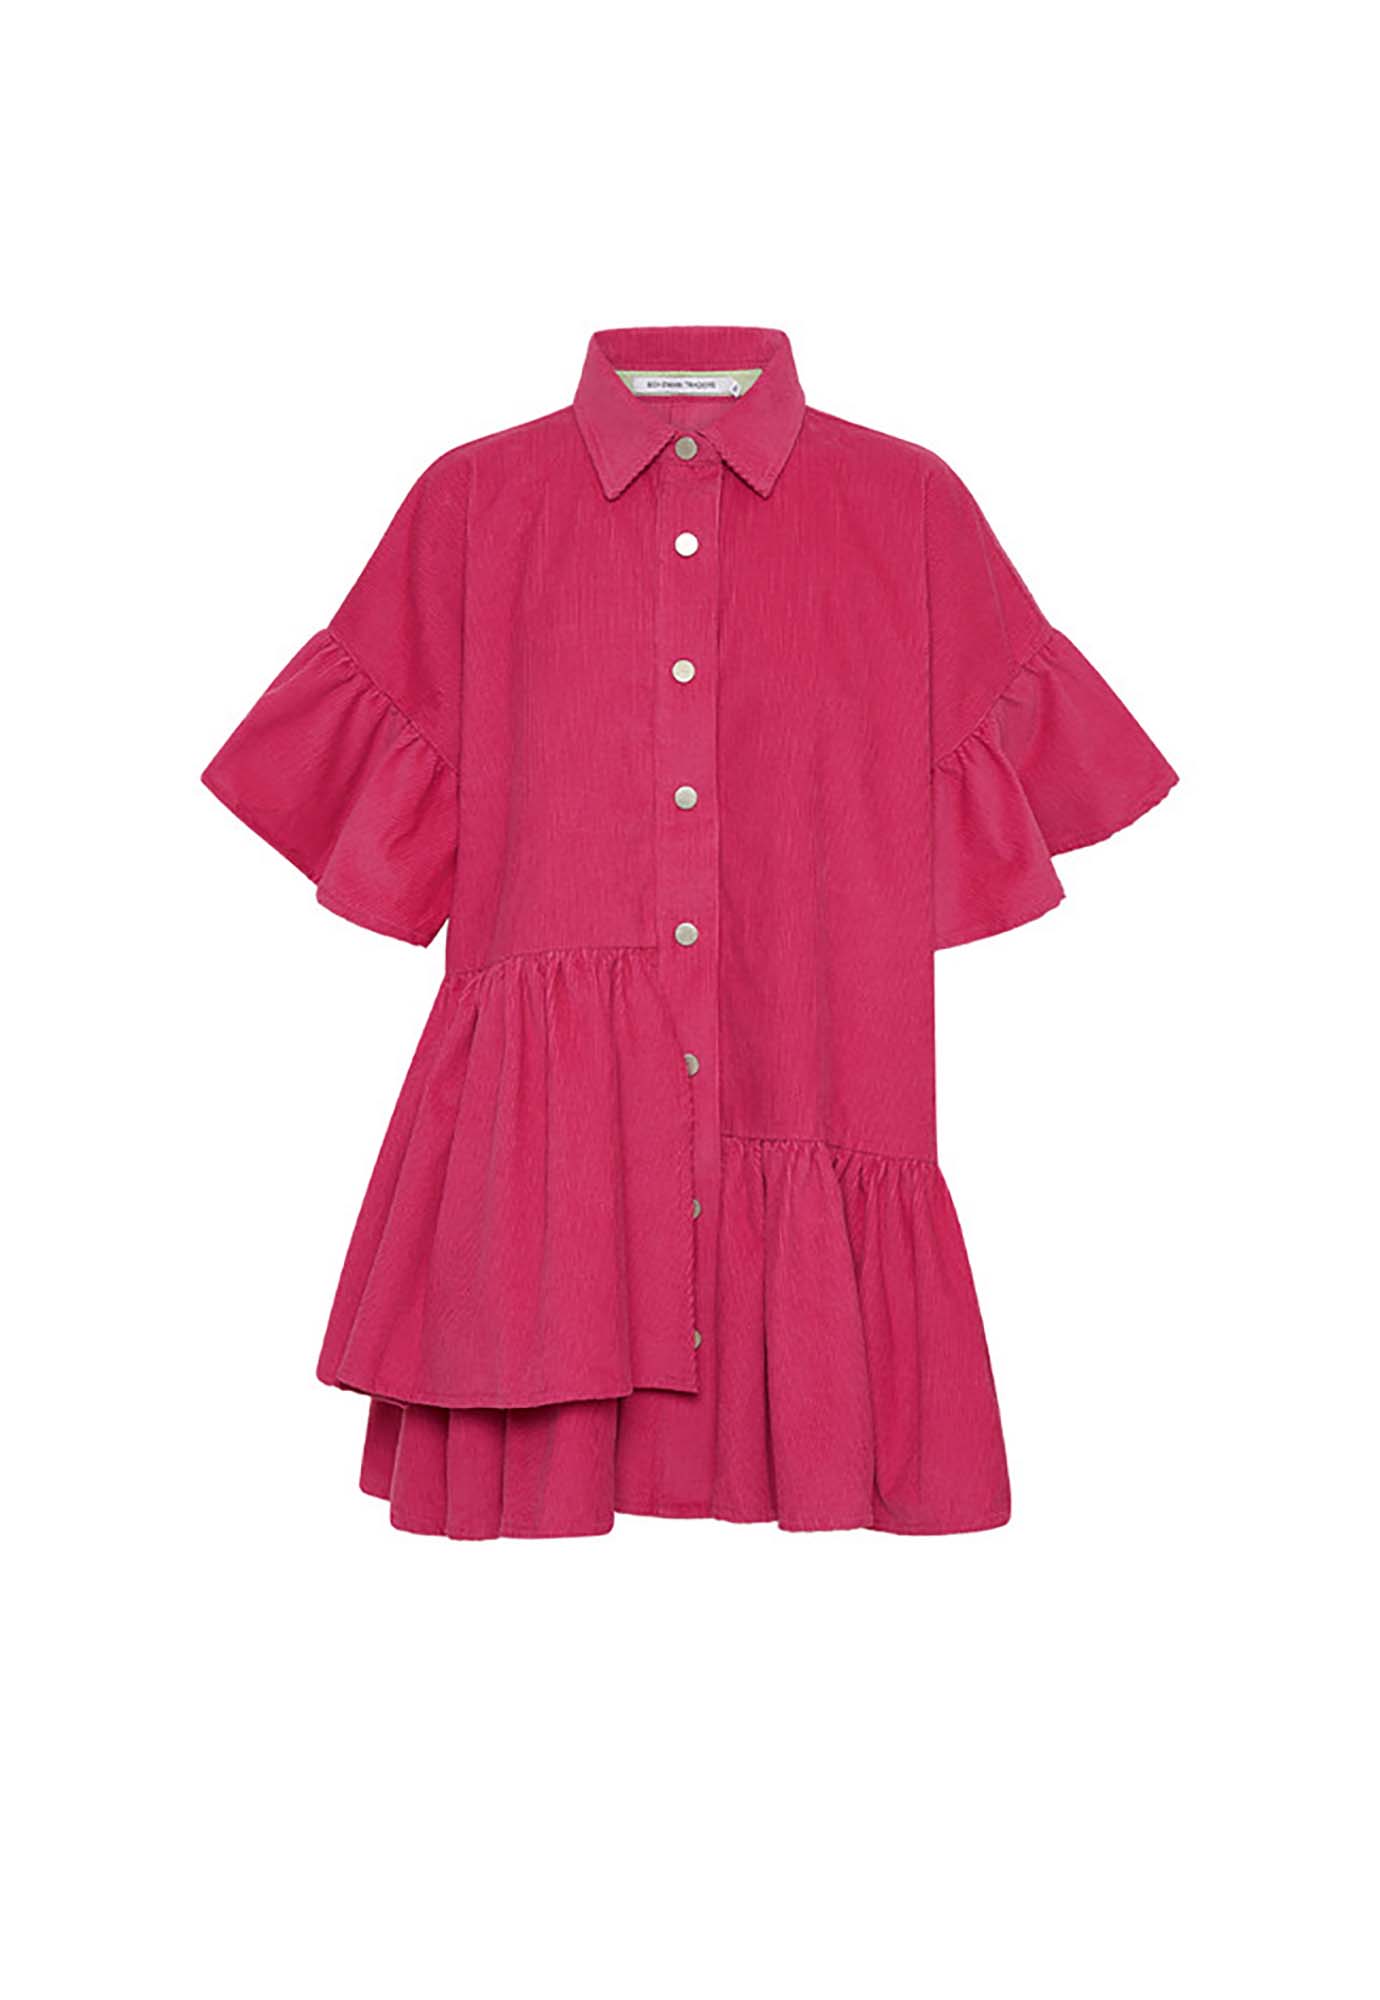 bohemian traders - genoa dress - pink